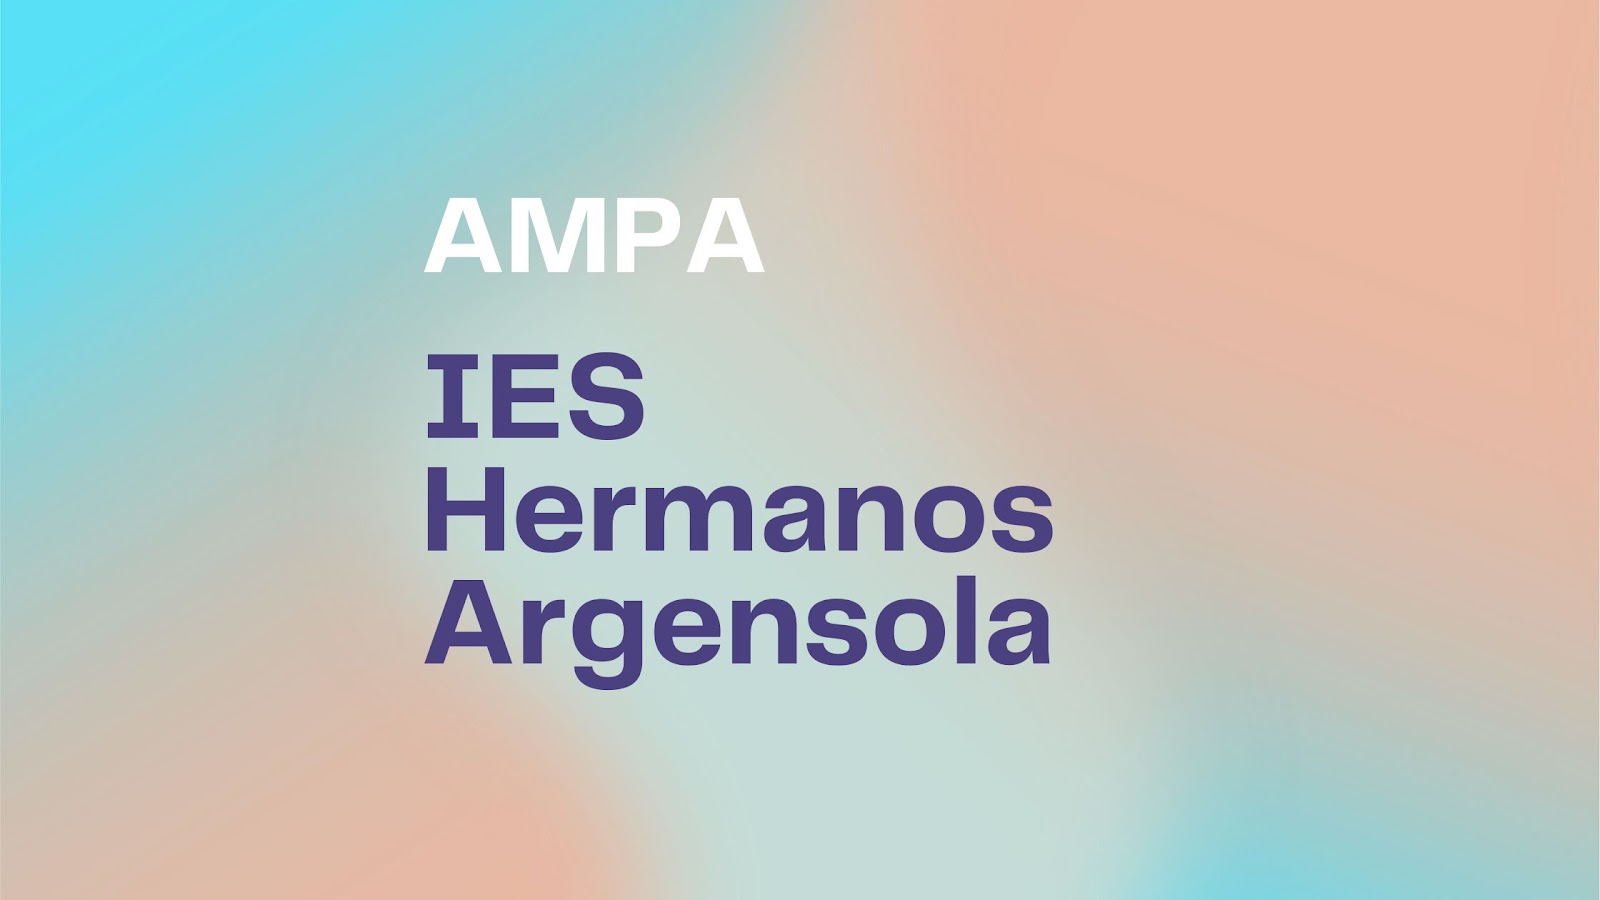 AMPA IES Hermanos Argensola